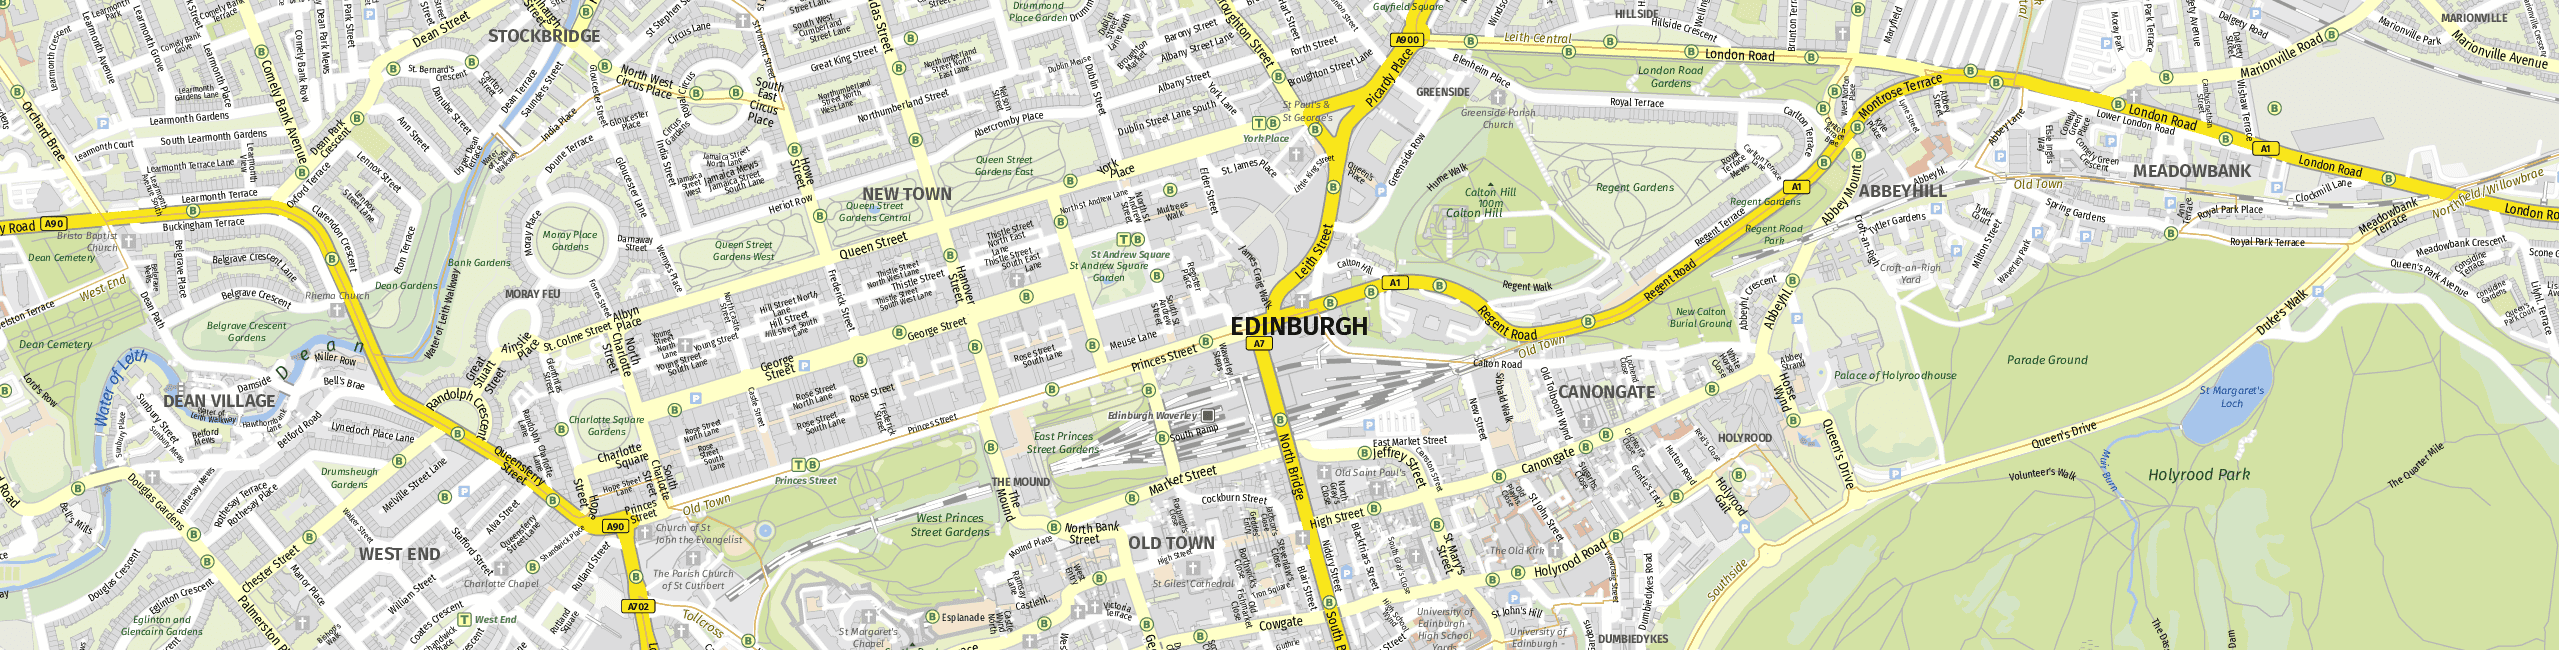 Stadtplan Edinburgh zum Downloaden.